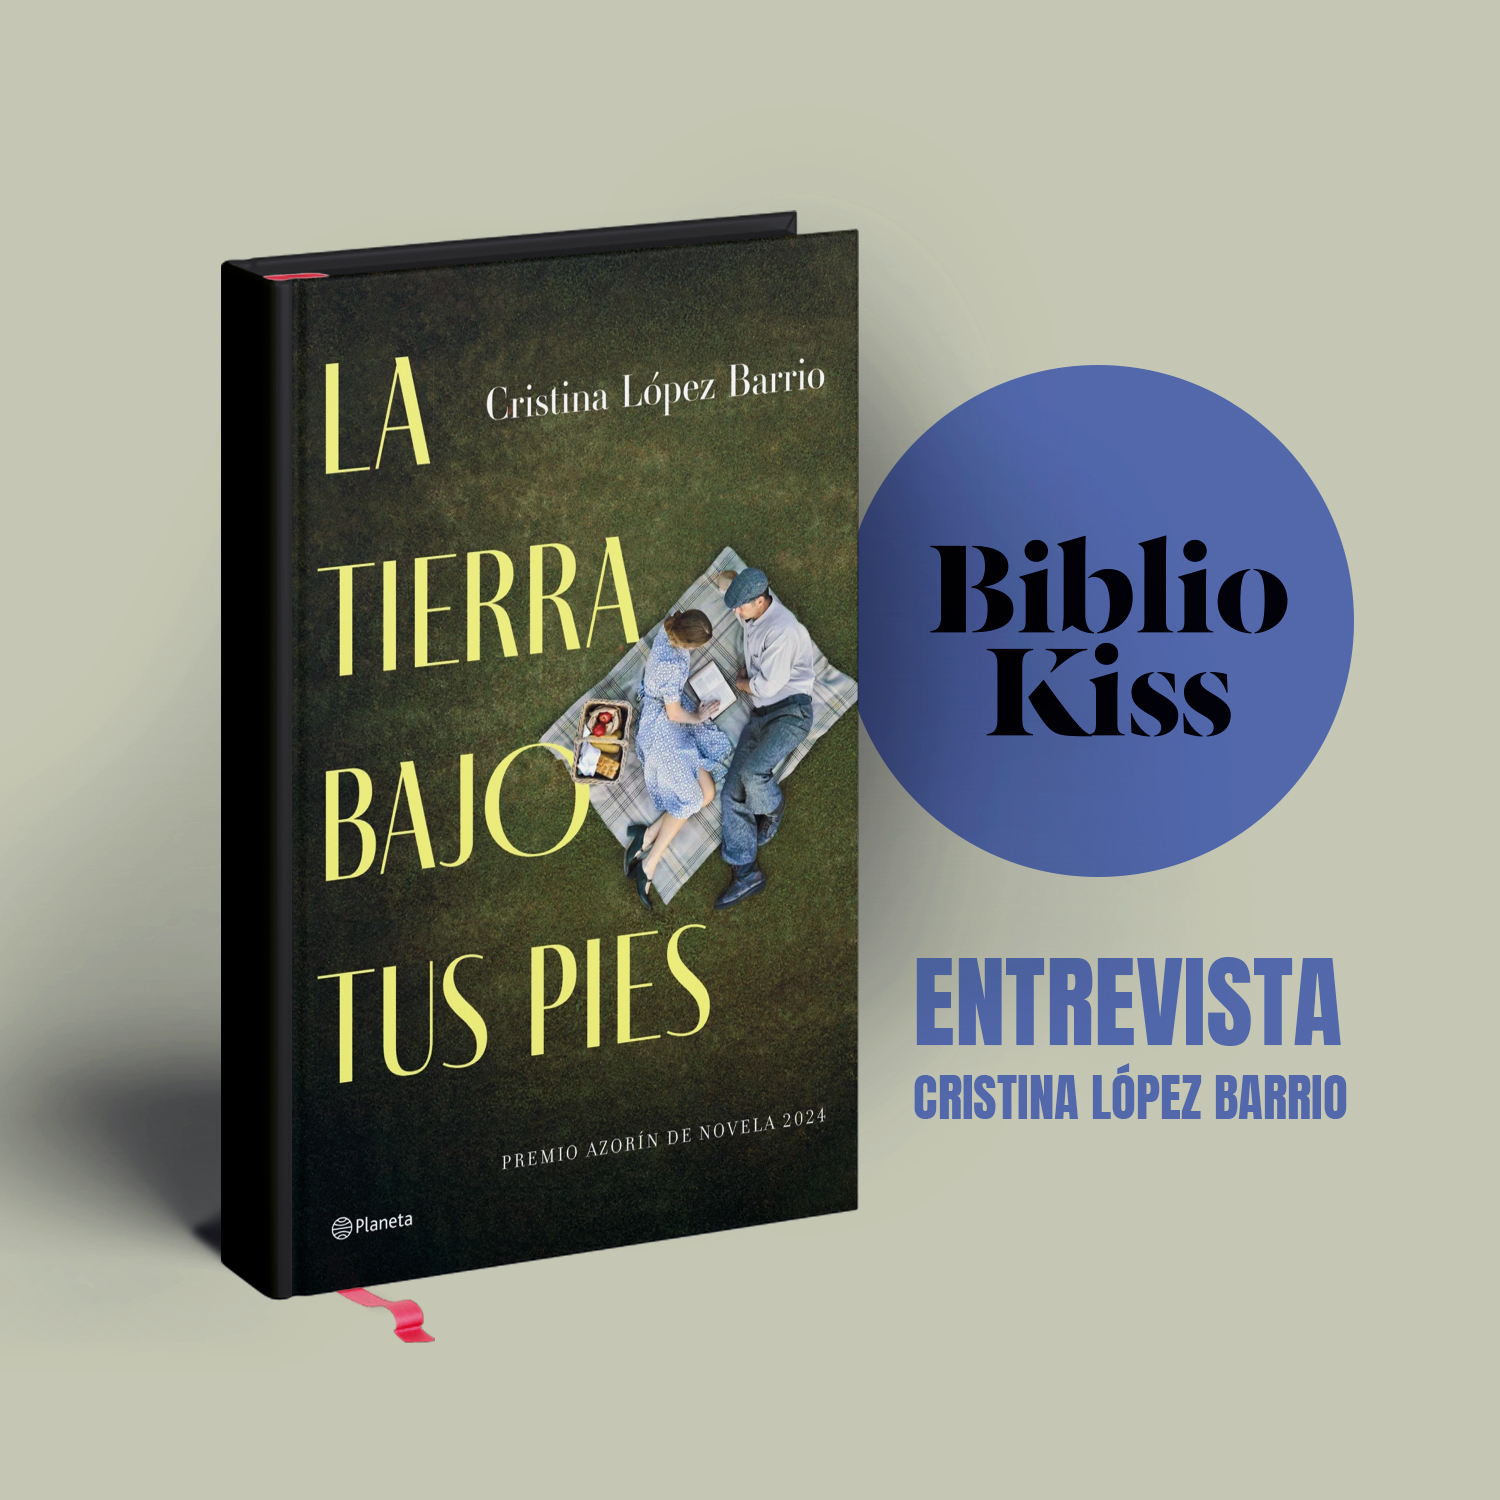 Cristina López Barrio nos presenta  “La tierra bajo tus pies”, Premio Azorín de Novela 2024